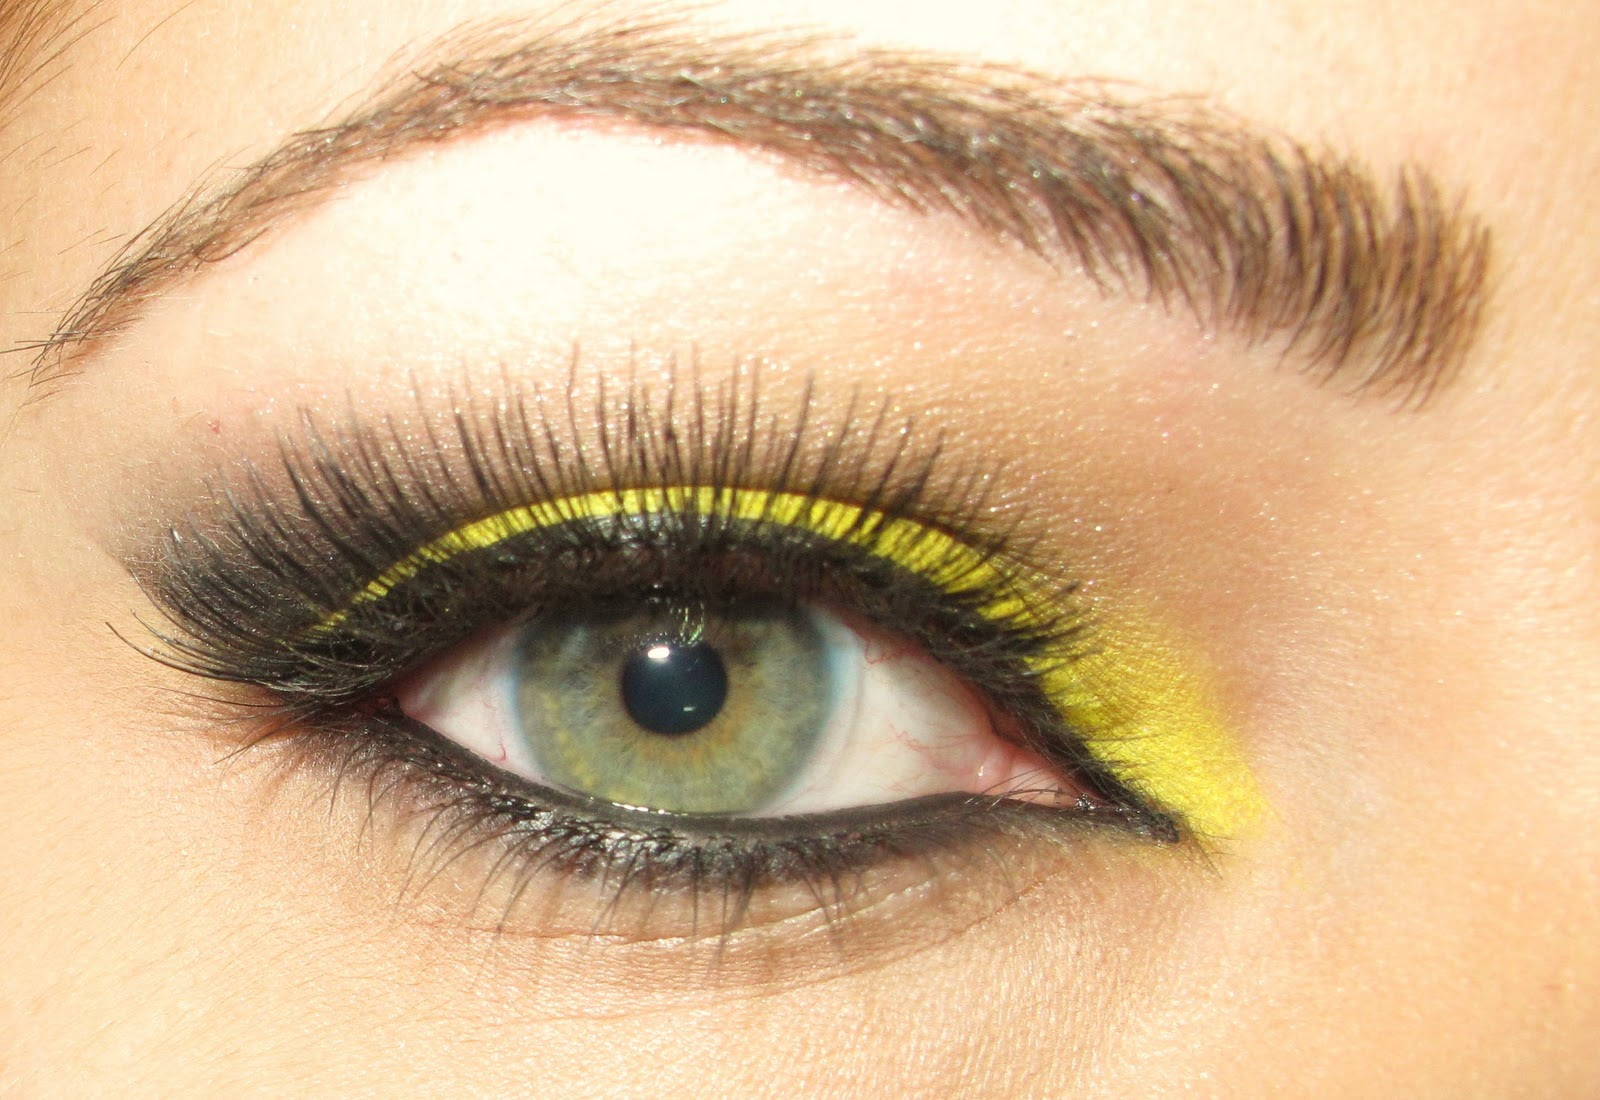 Yellow And Black Eye Makeup The Makeup Artist Yellowblack Eye Makeup